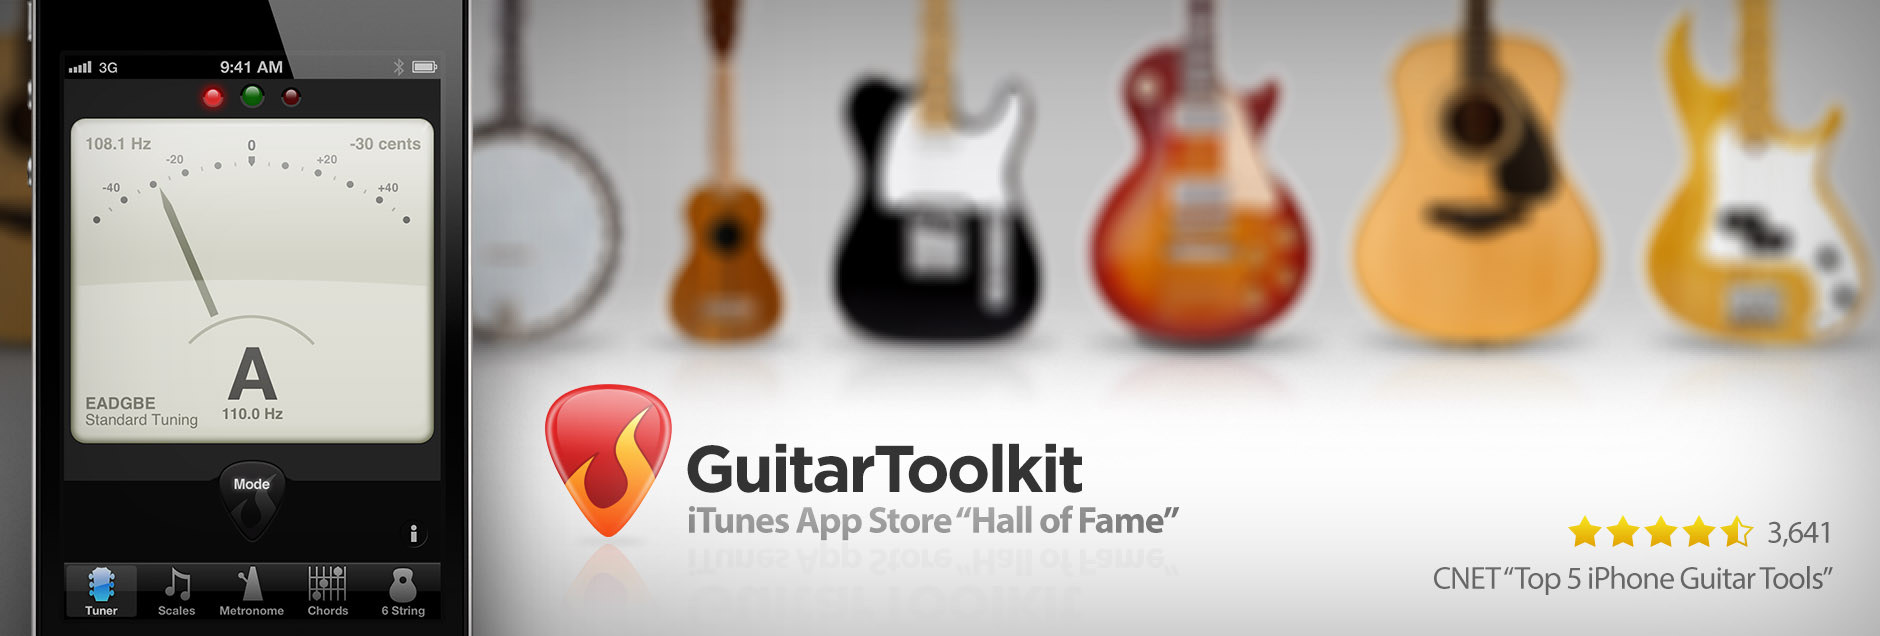 GuitarToolkit feature image